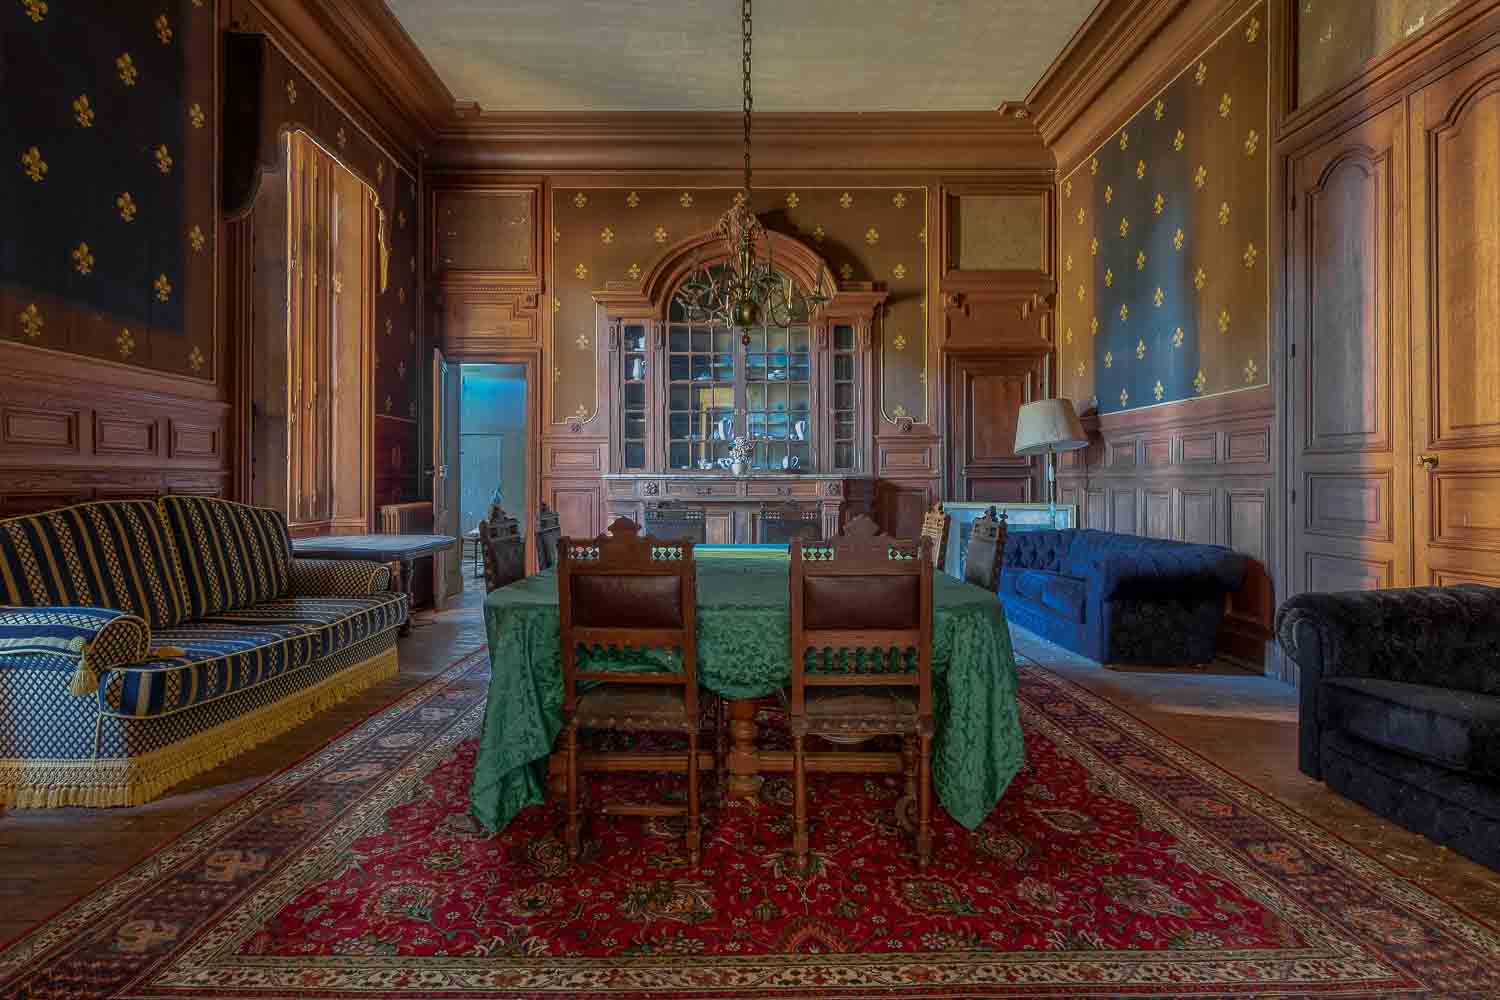 Luxurious dining room in Chateau de la Rivière featuring ornate decor and garden vistas.